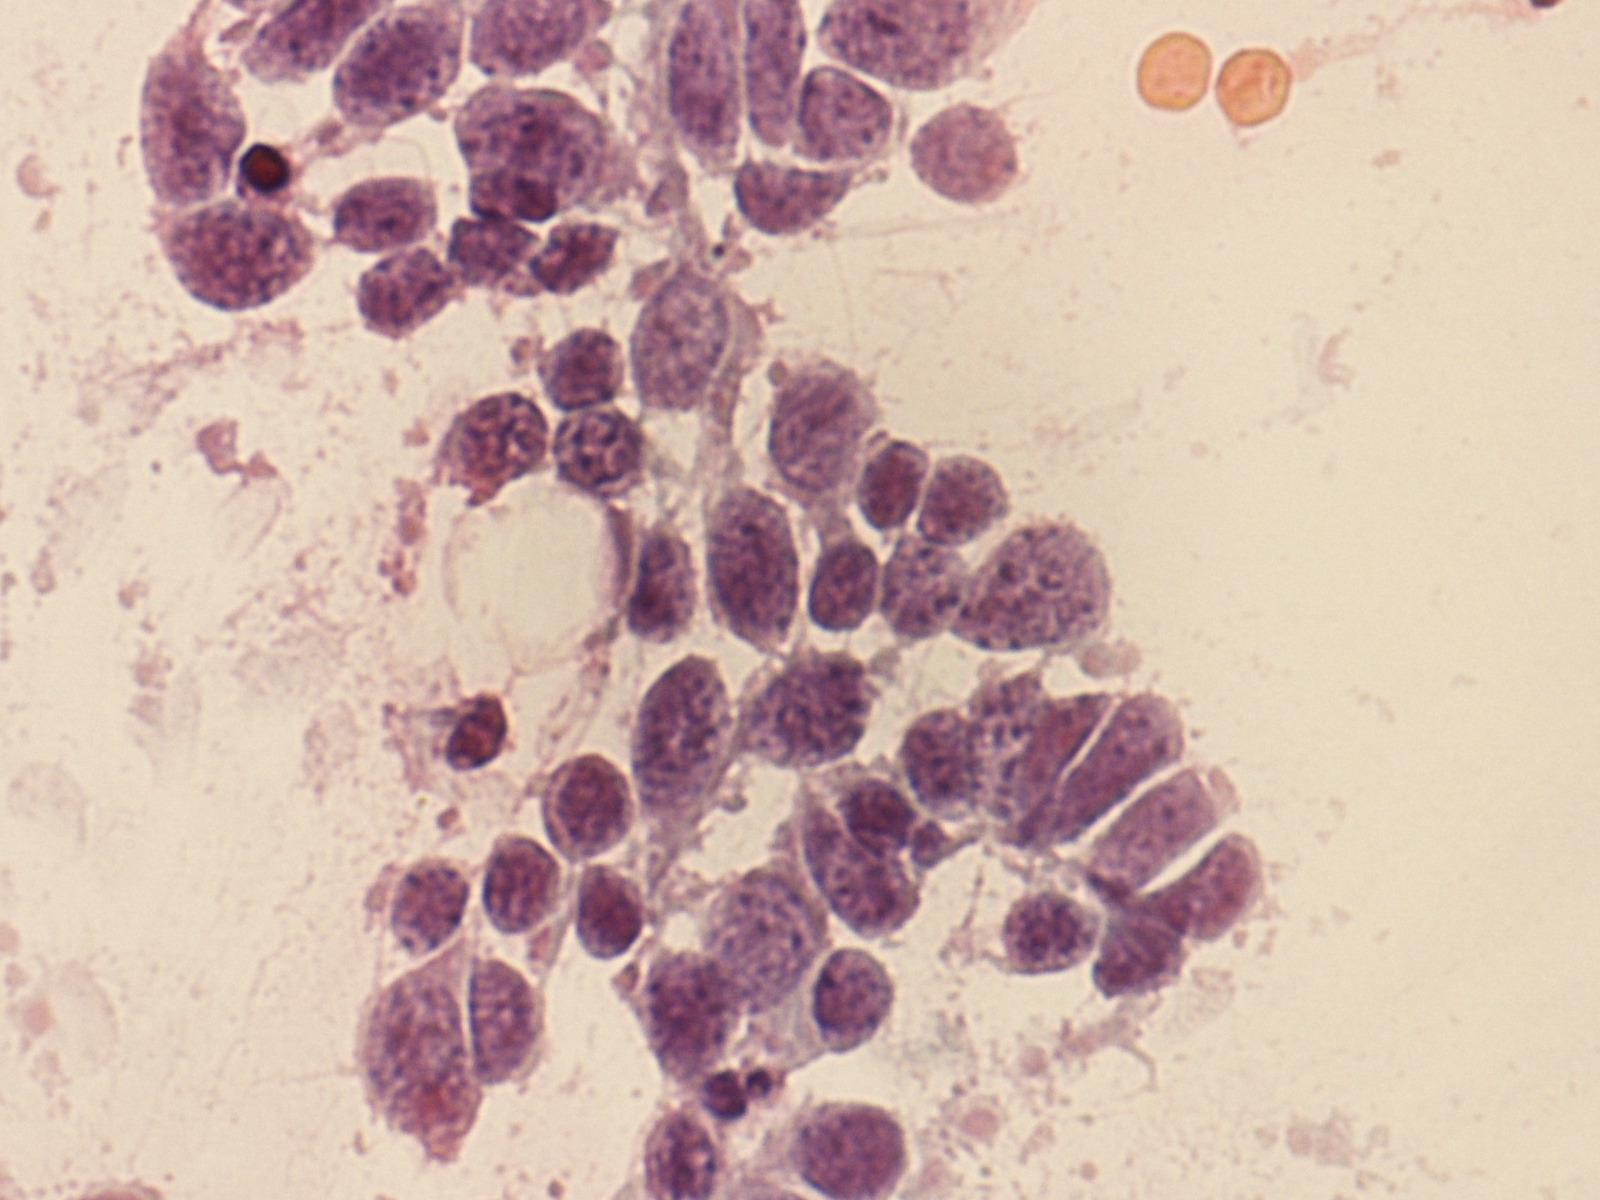 CASE N°29 - Pulmonary Small Cell Carcinoma | cytology blog ...